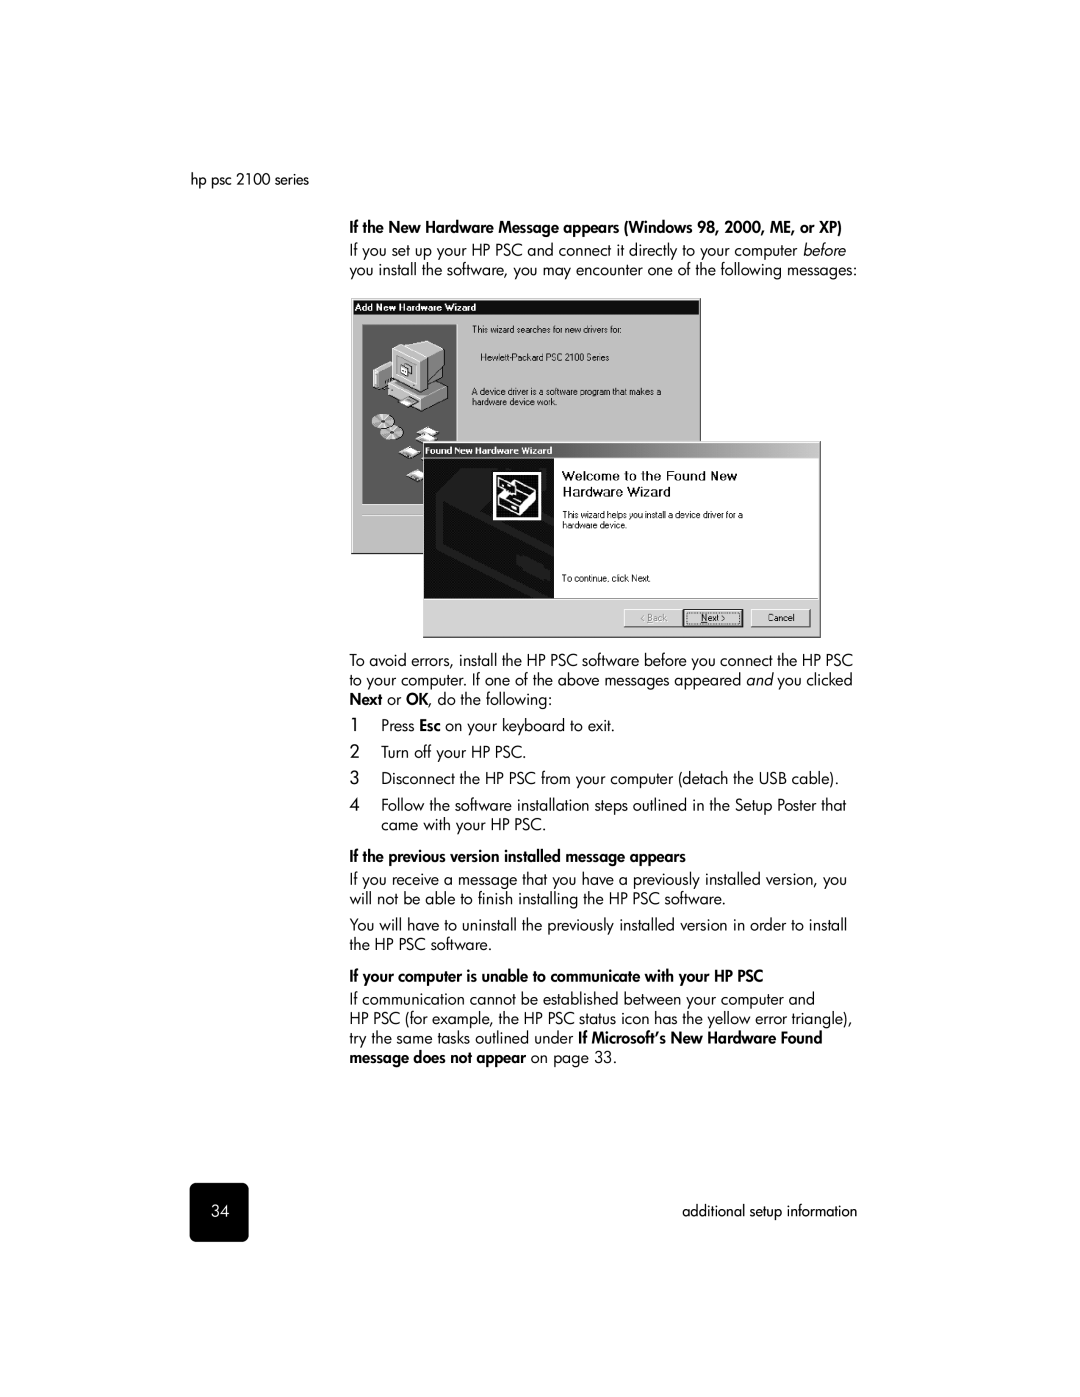 HP 2100 manual Additional setup information 